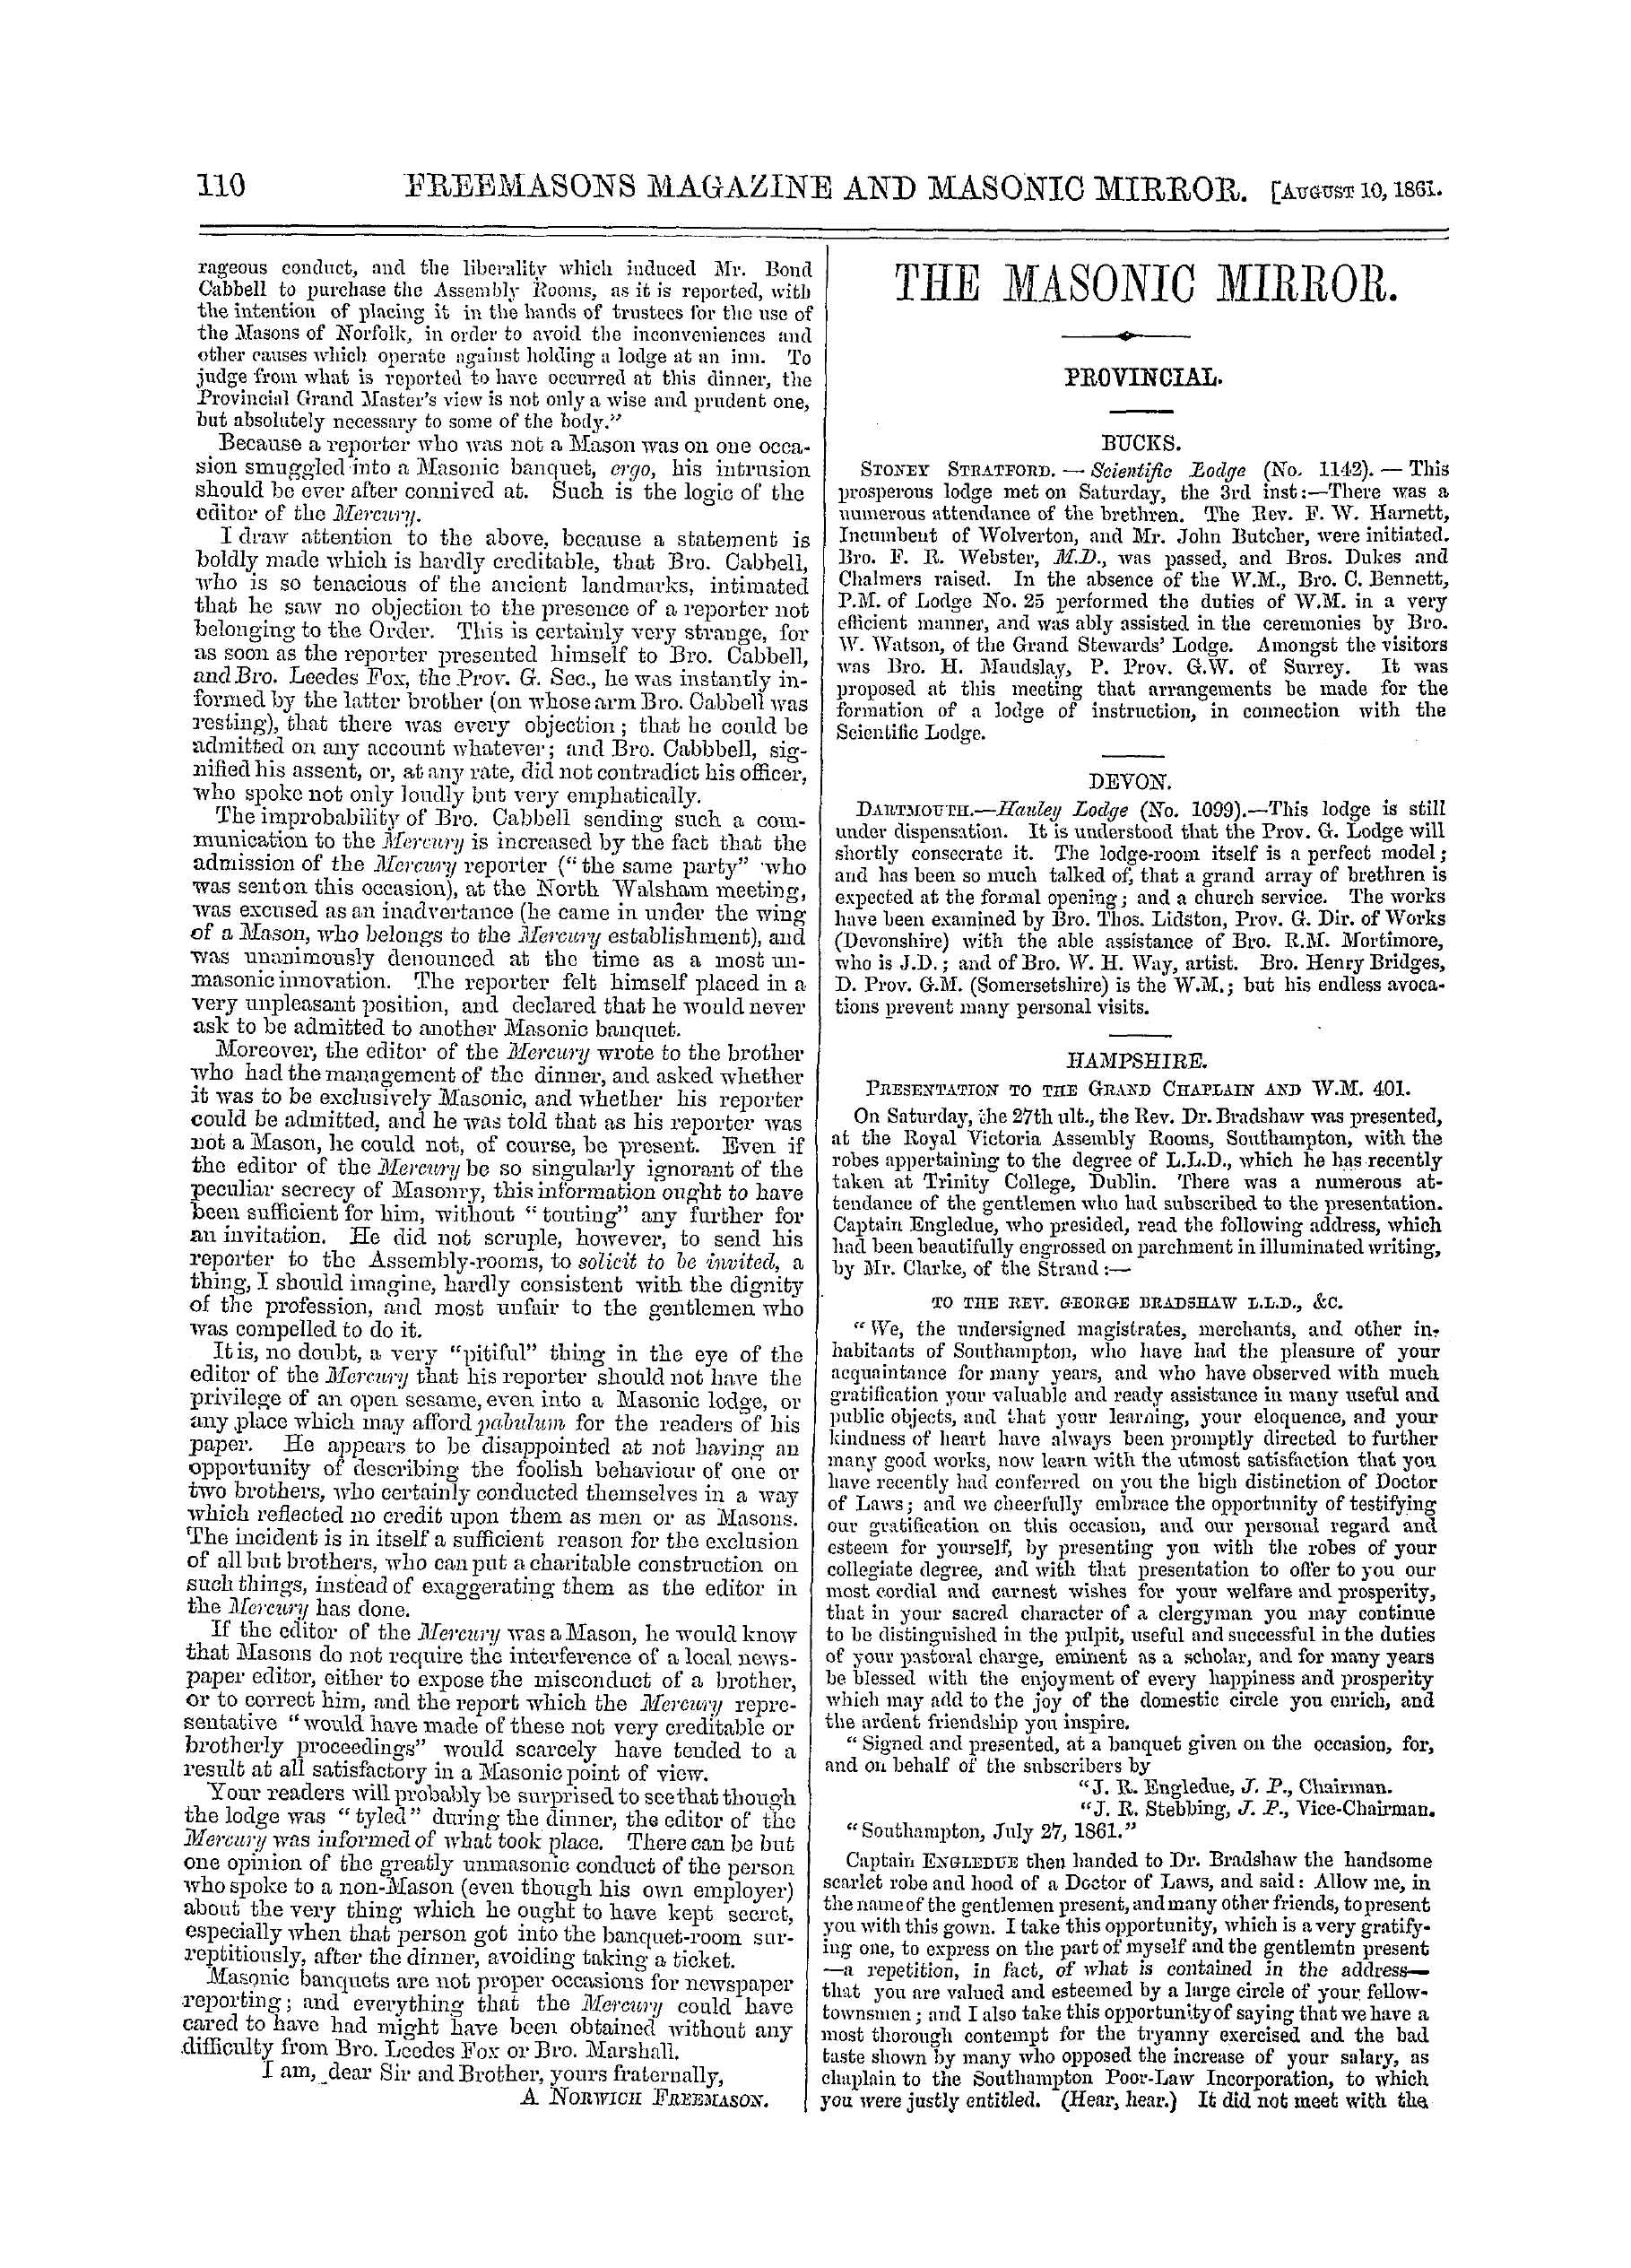 The Freemasons' Monthly Magazine: 1861-08-10 - Admission Of Non-Masons To Masonic Banquets.